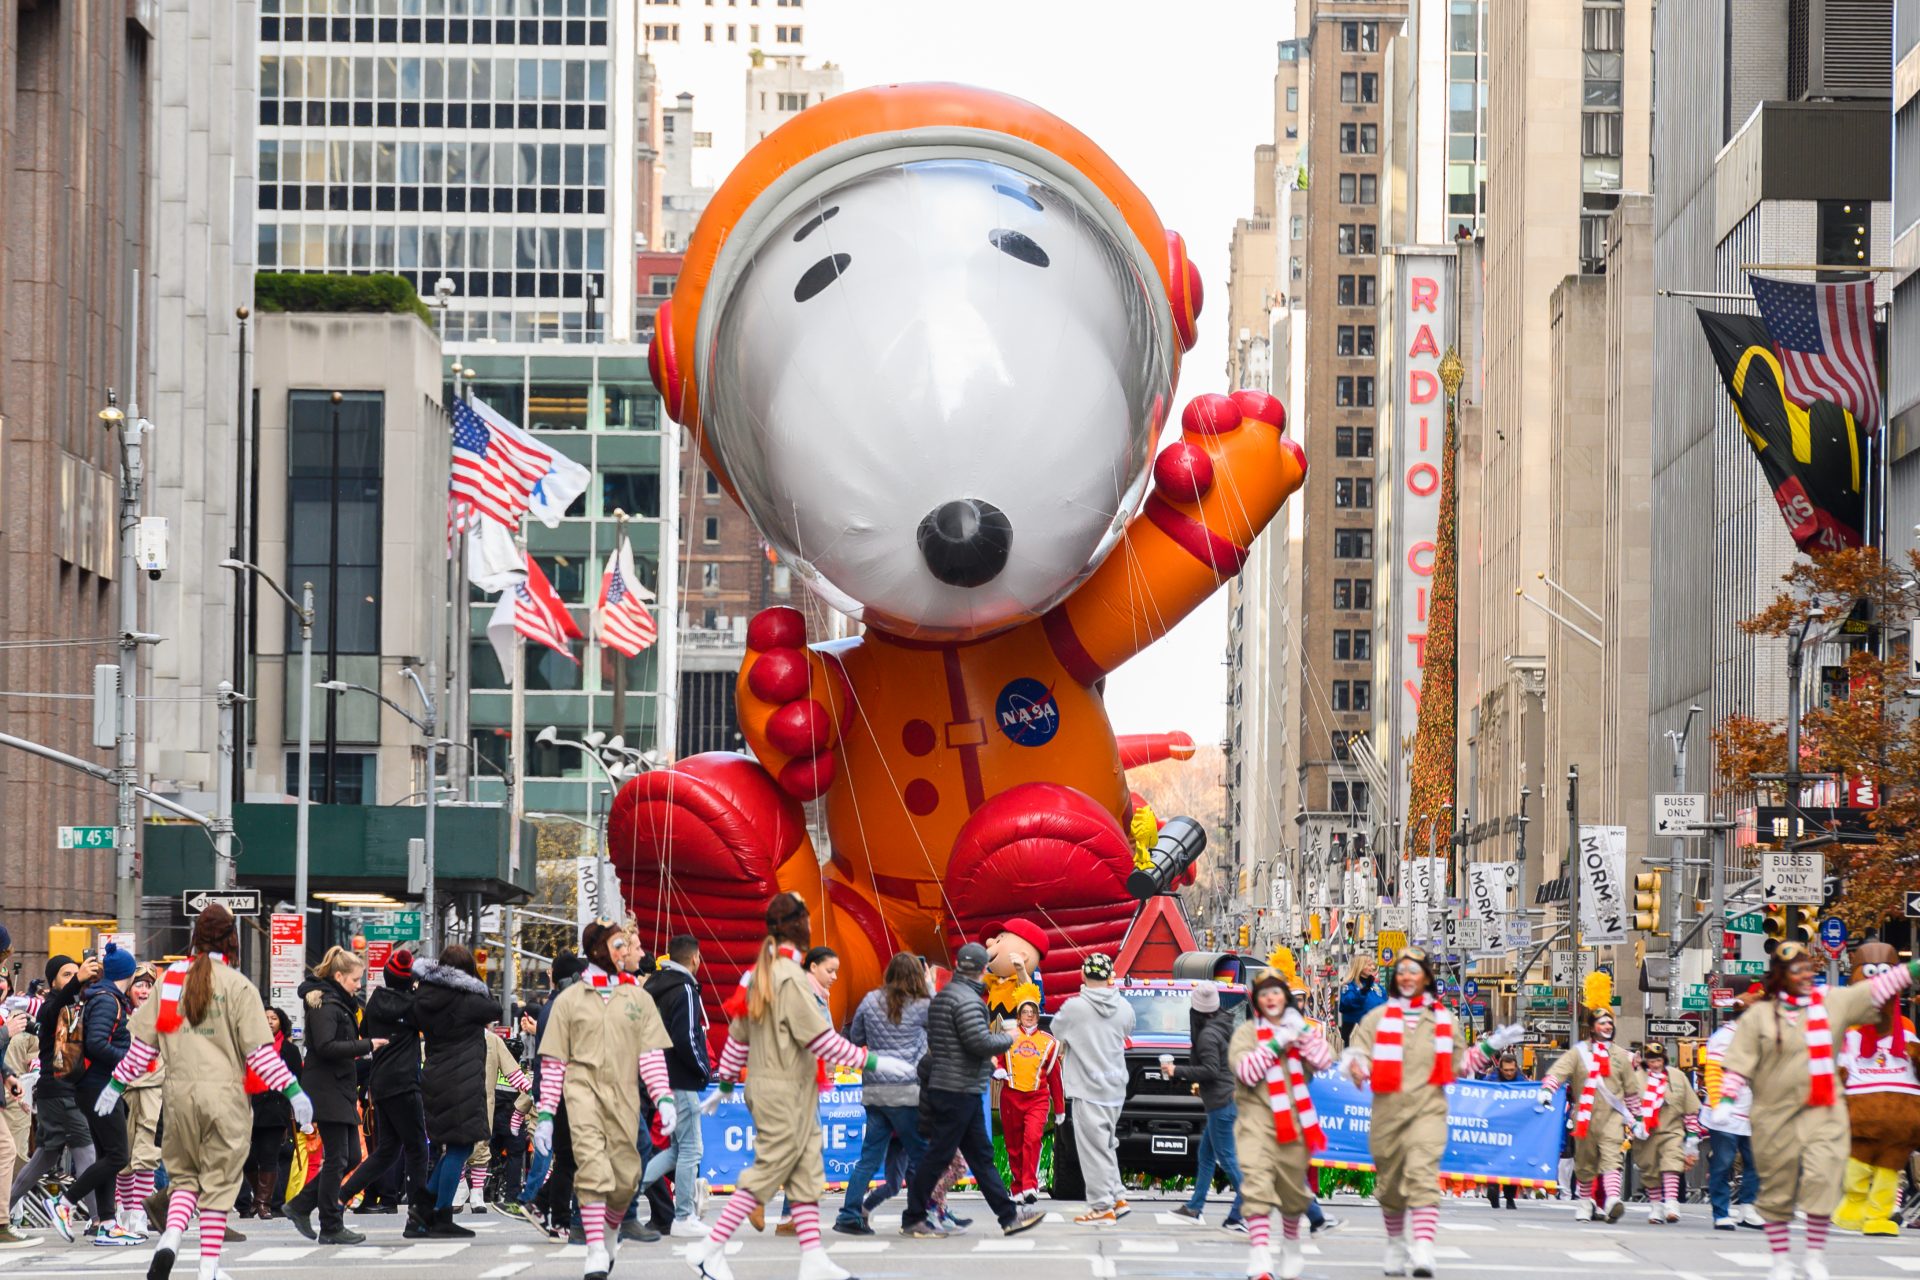 Snoopy: The longest participant 